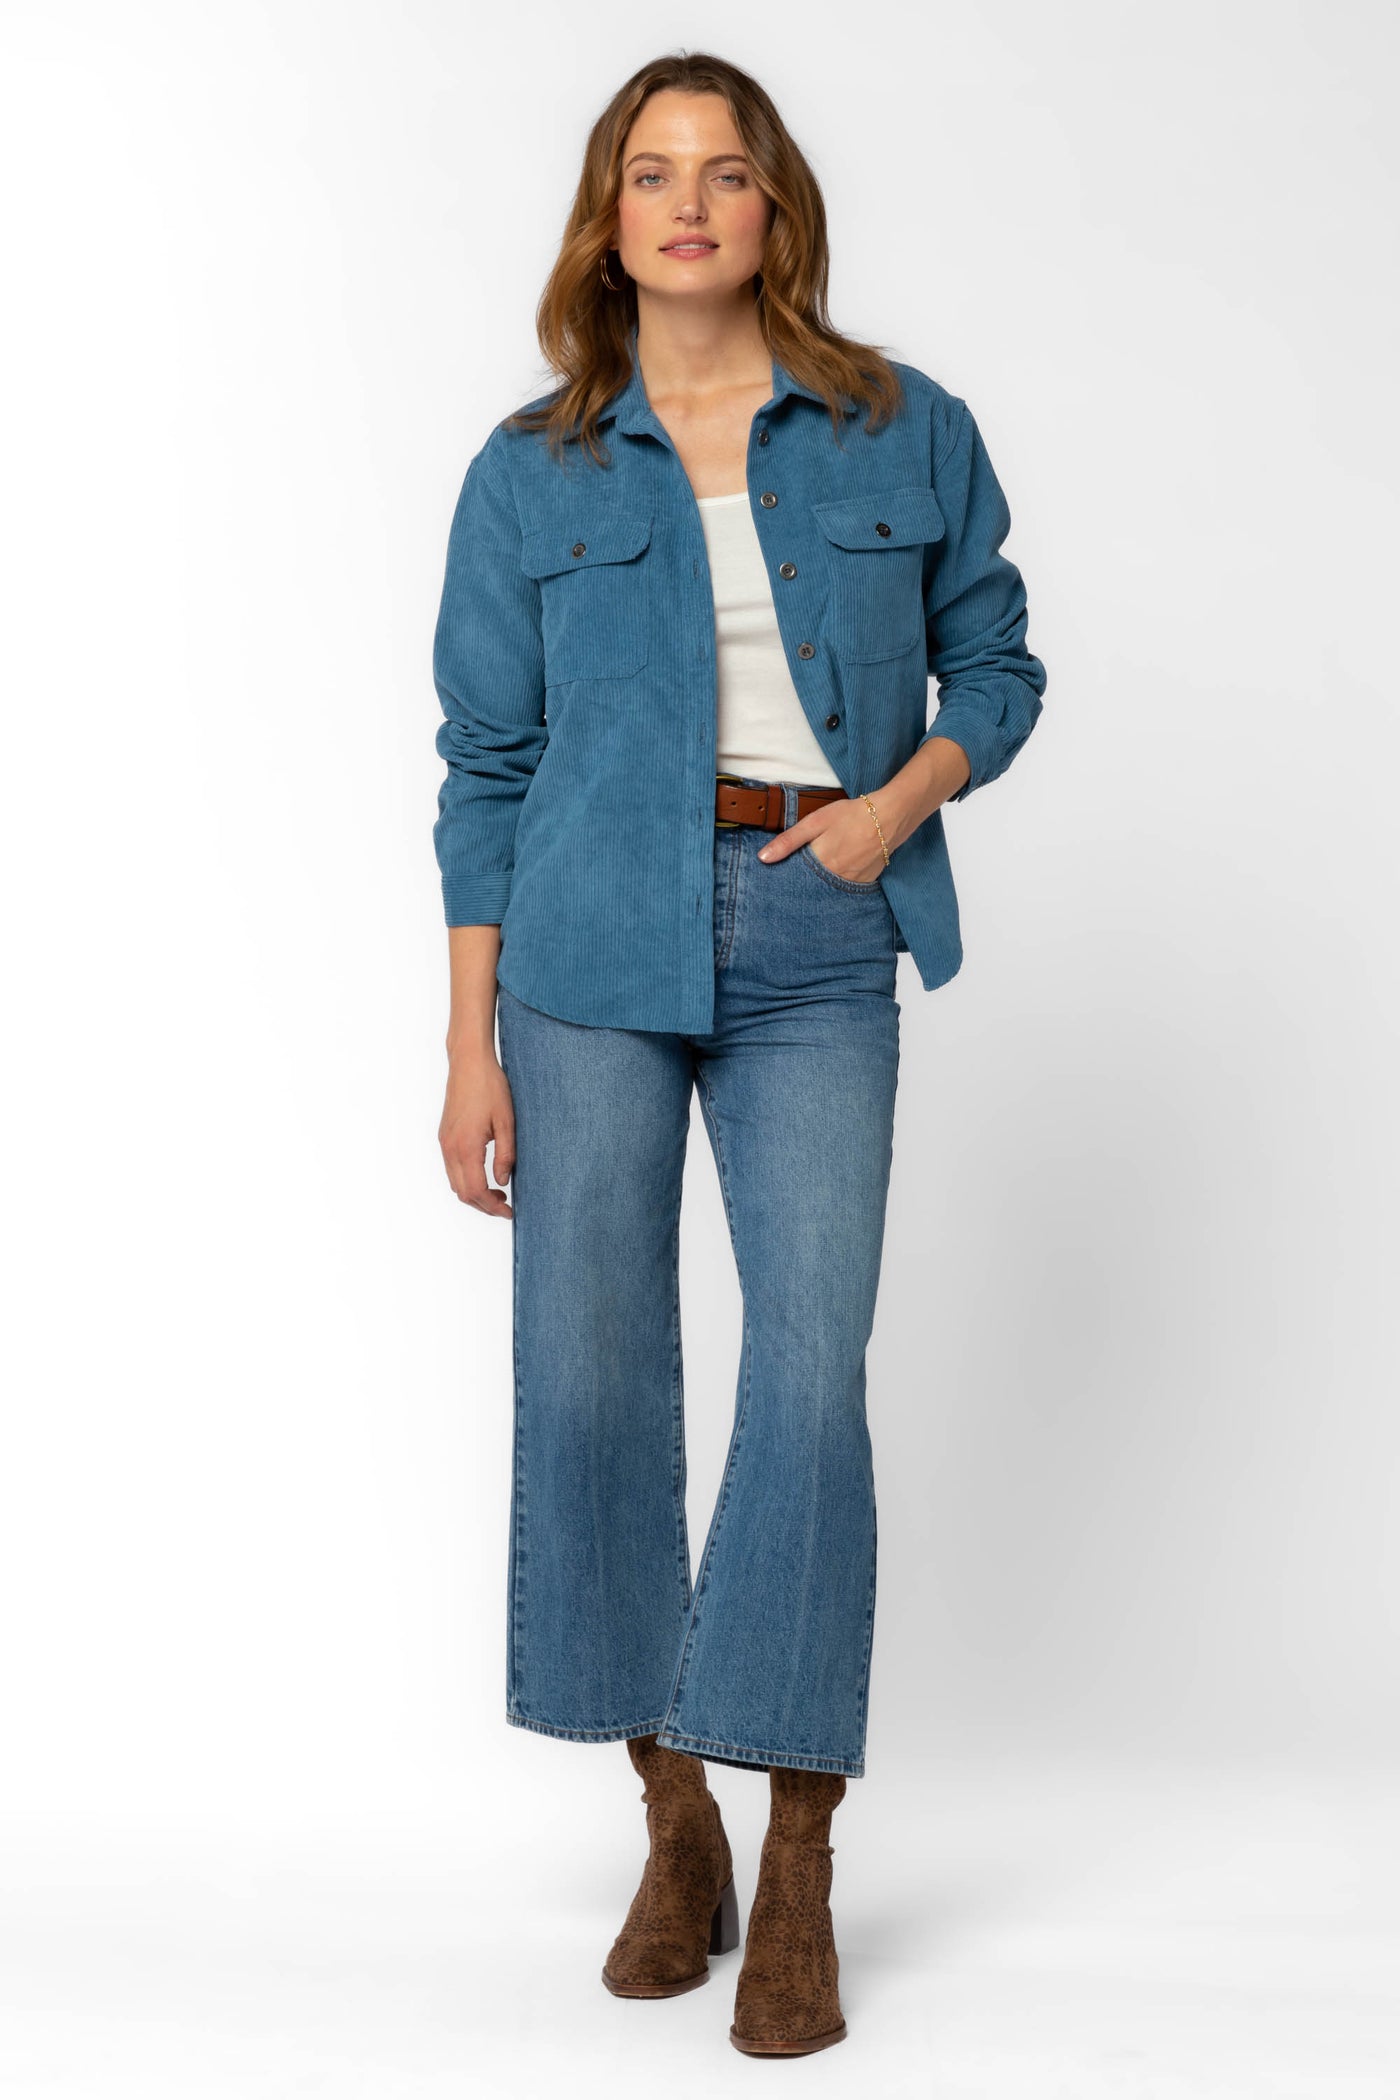 Carmele Blue Spruce Shacket - Jackets & Outerwear - Velvet Heart Clothing